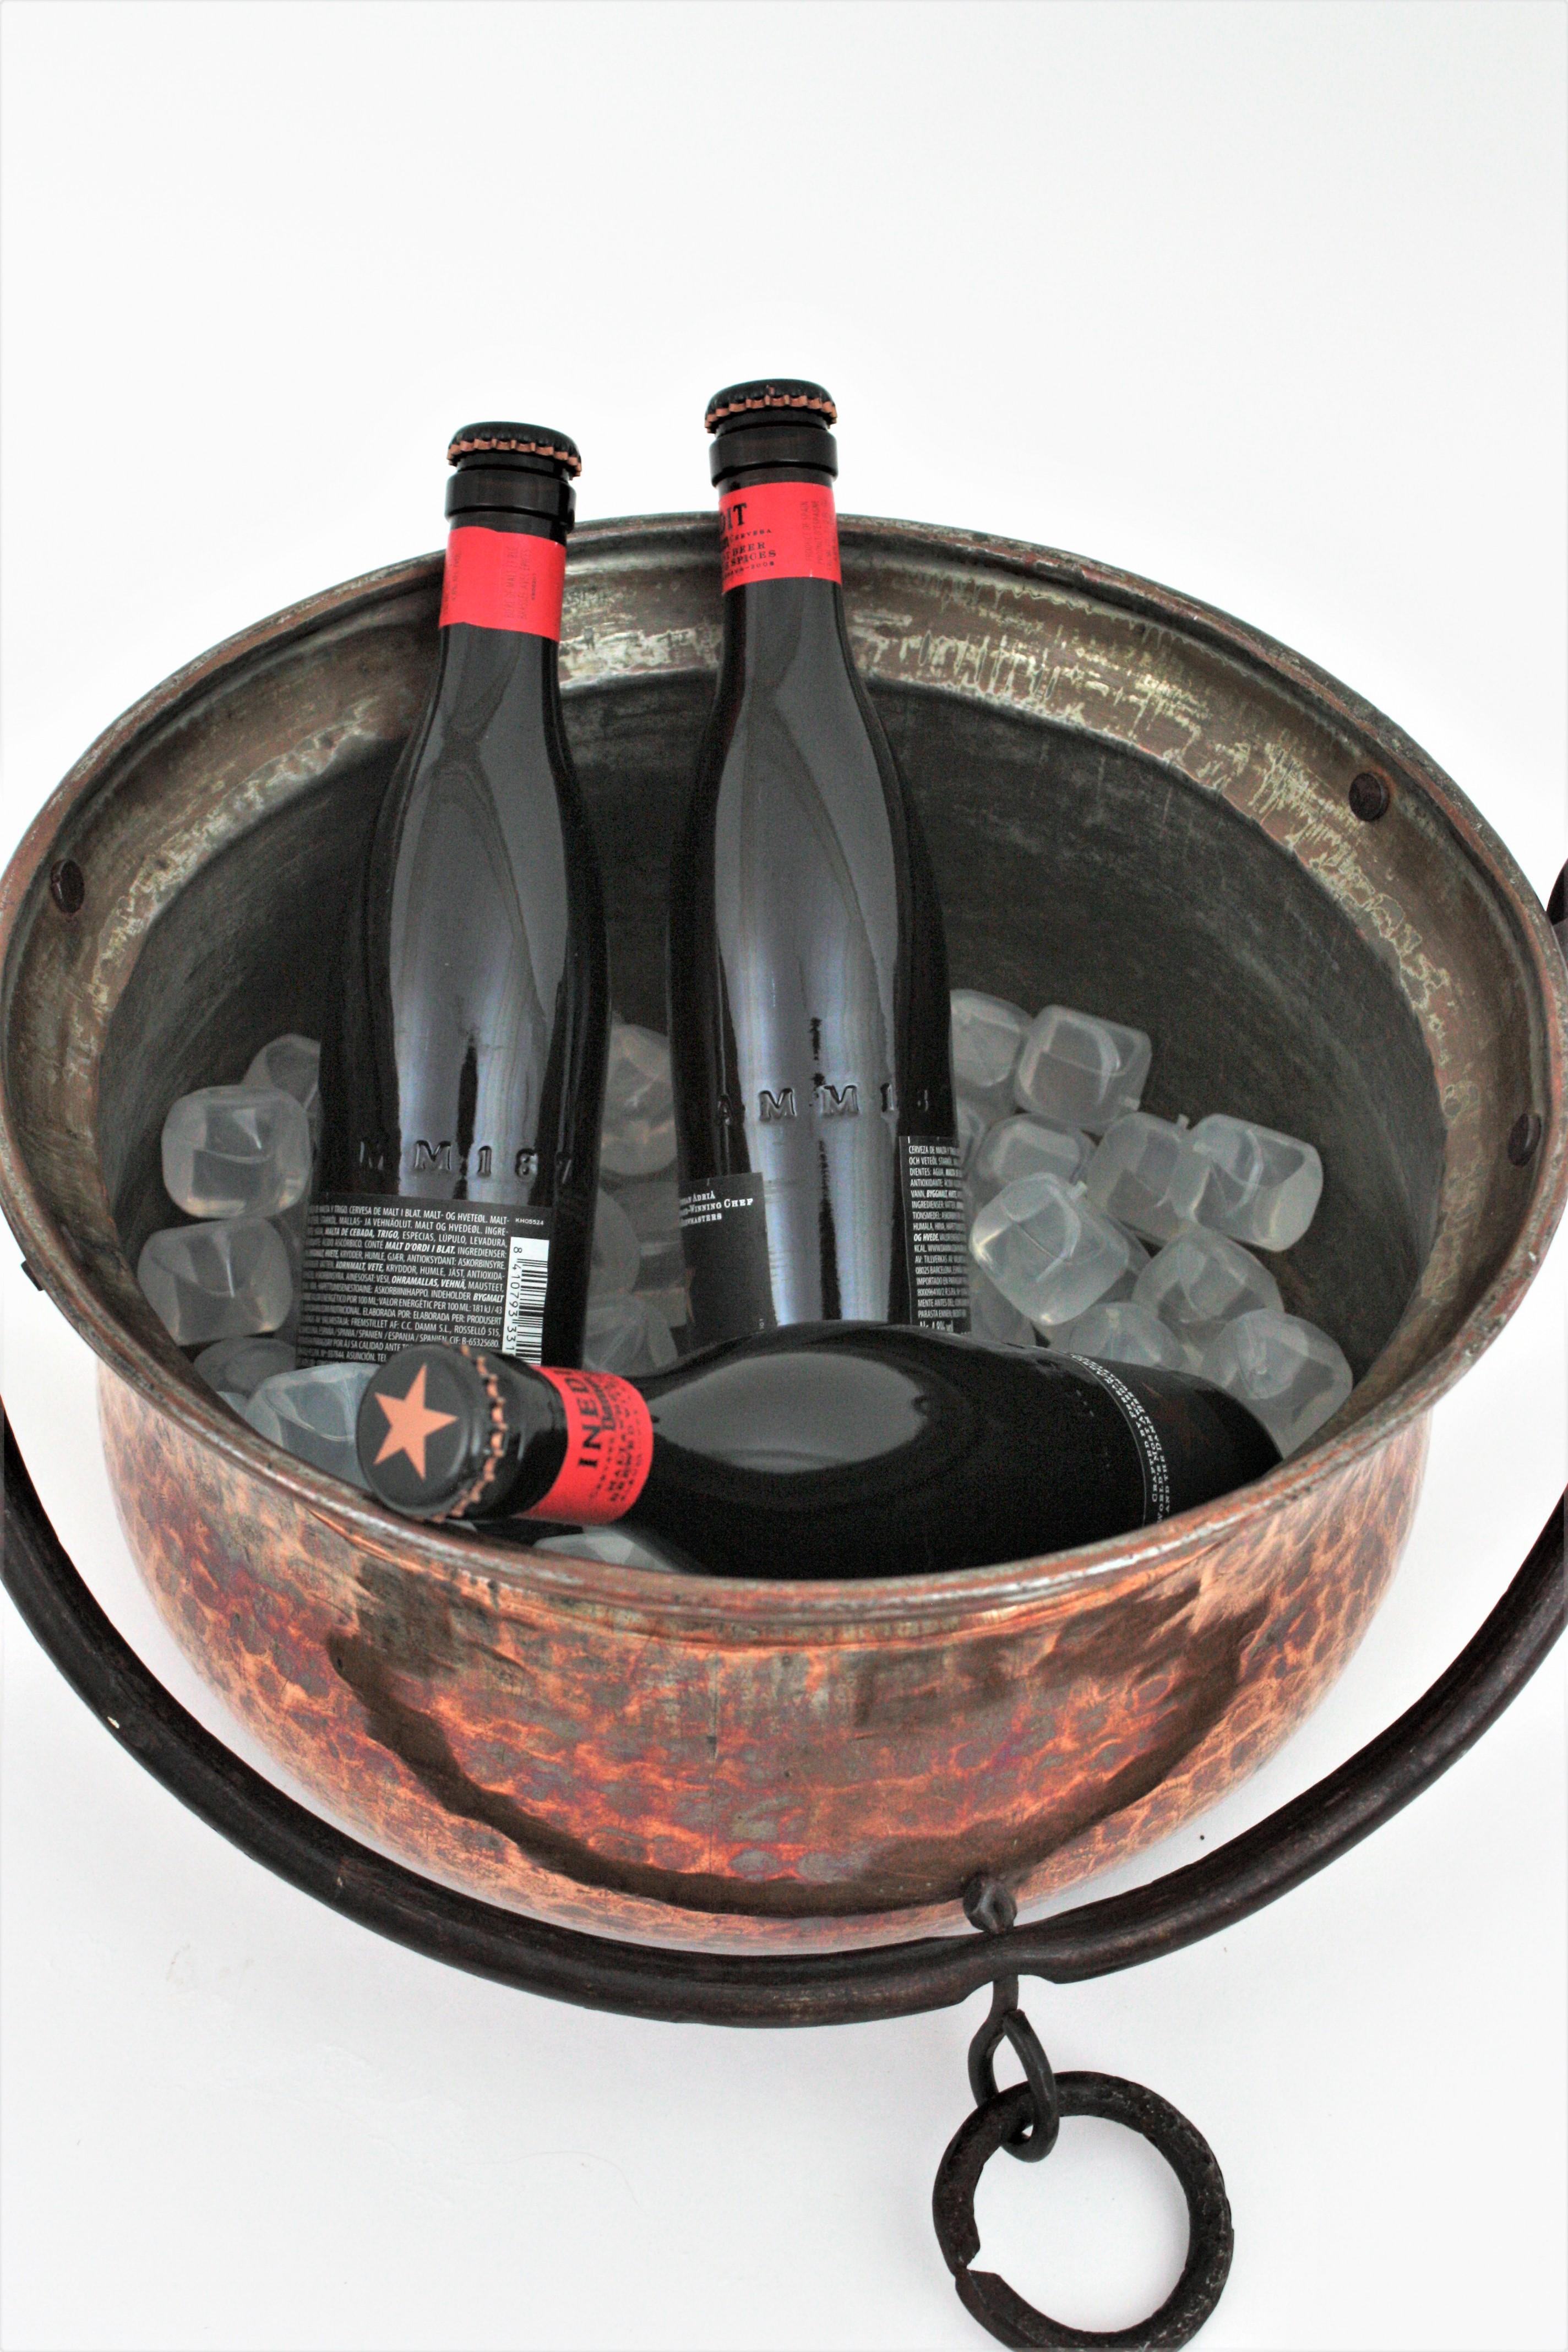 Hammered Copper Cauldron Centerpiece Bowl / Wine Cooler / Planter For Sale